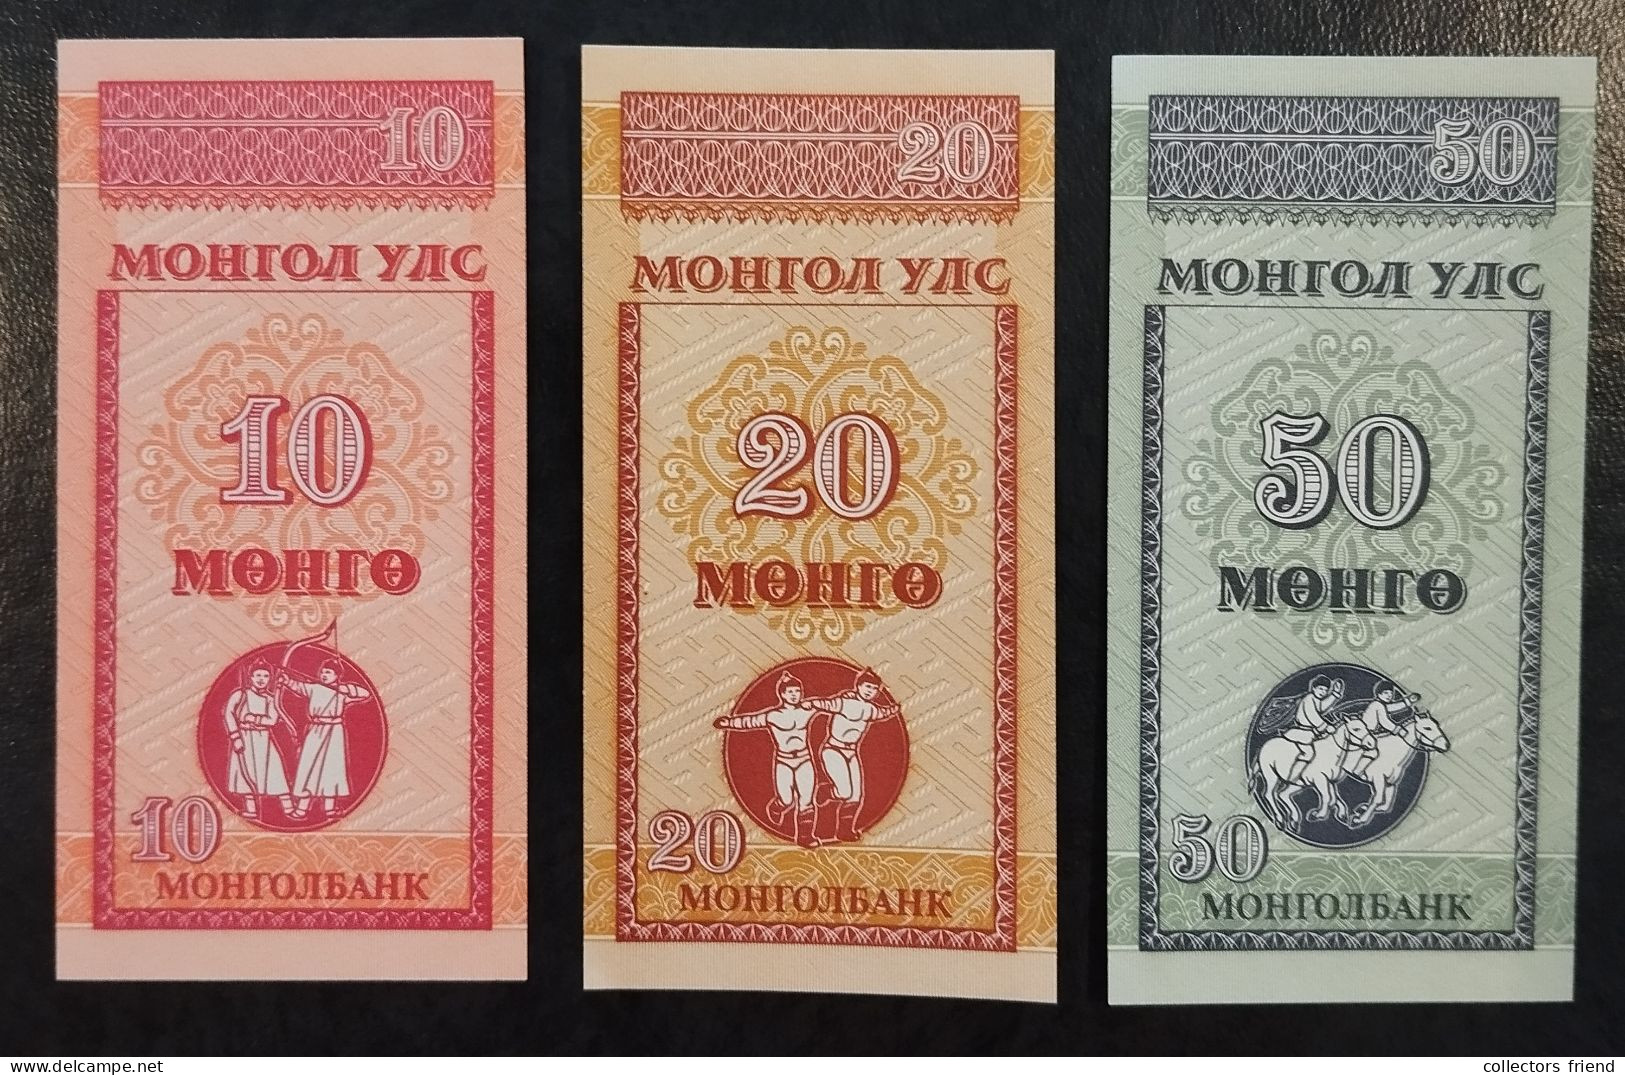 Mongolia - 1993 - 10 + 20 + 50 Möngö - UNC - Nepal